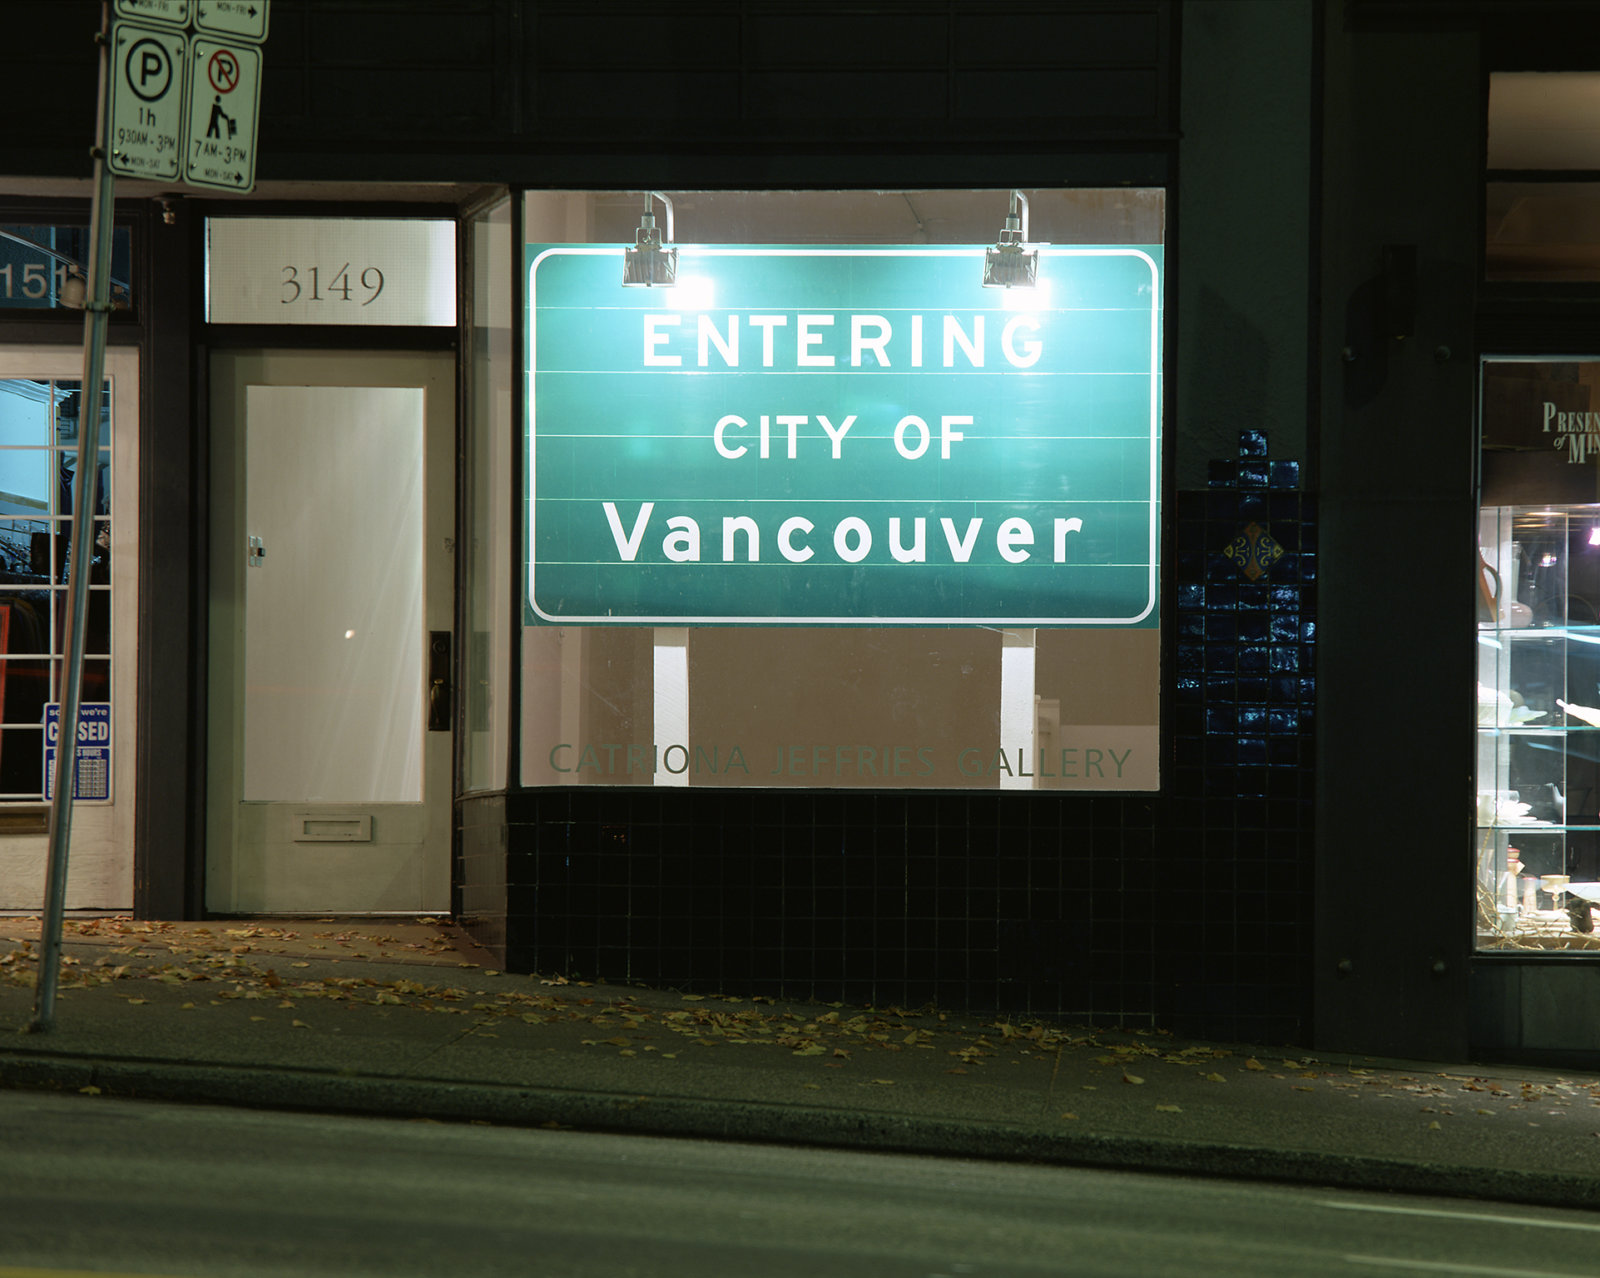 Ron Terada, Entering City of Vancouver, 2002, 3m reflective highway vinyl, extruded aluminum, industrial lights, galvanized steel, wood